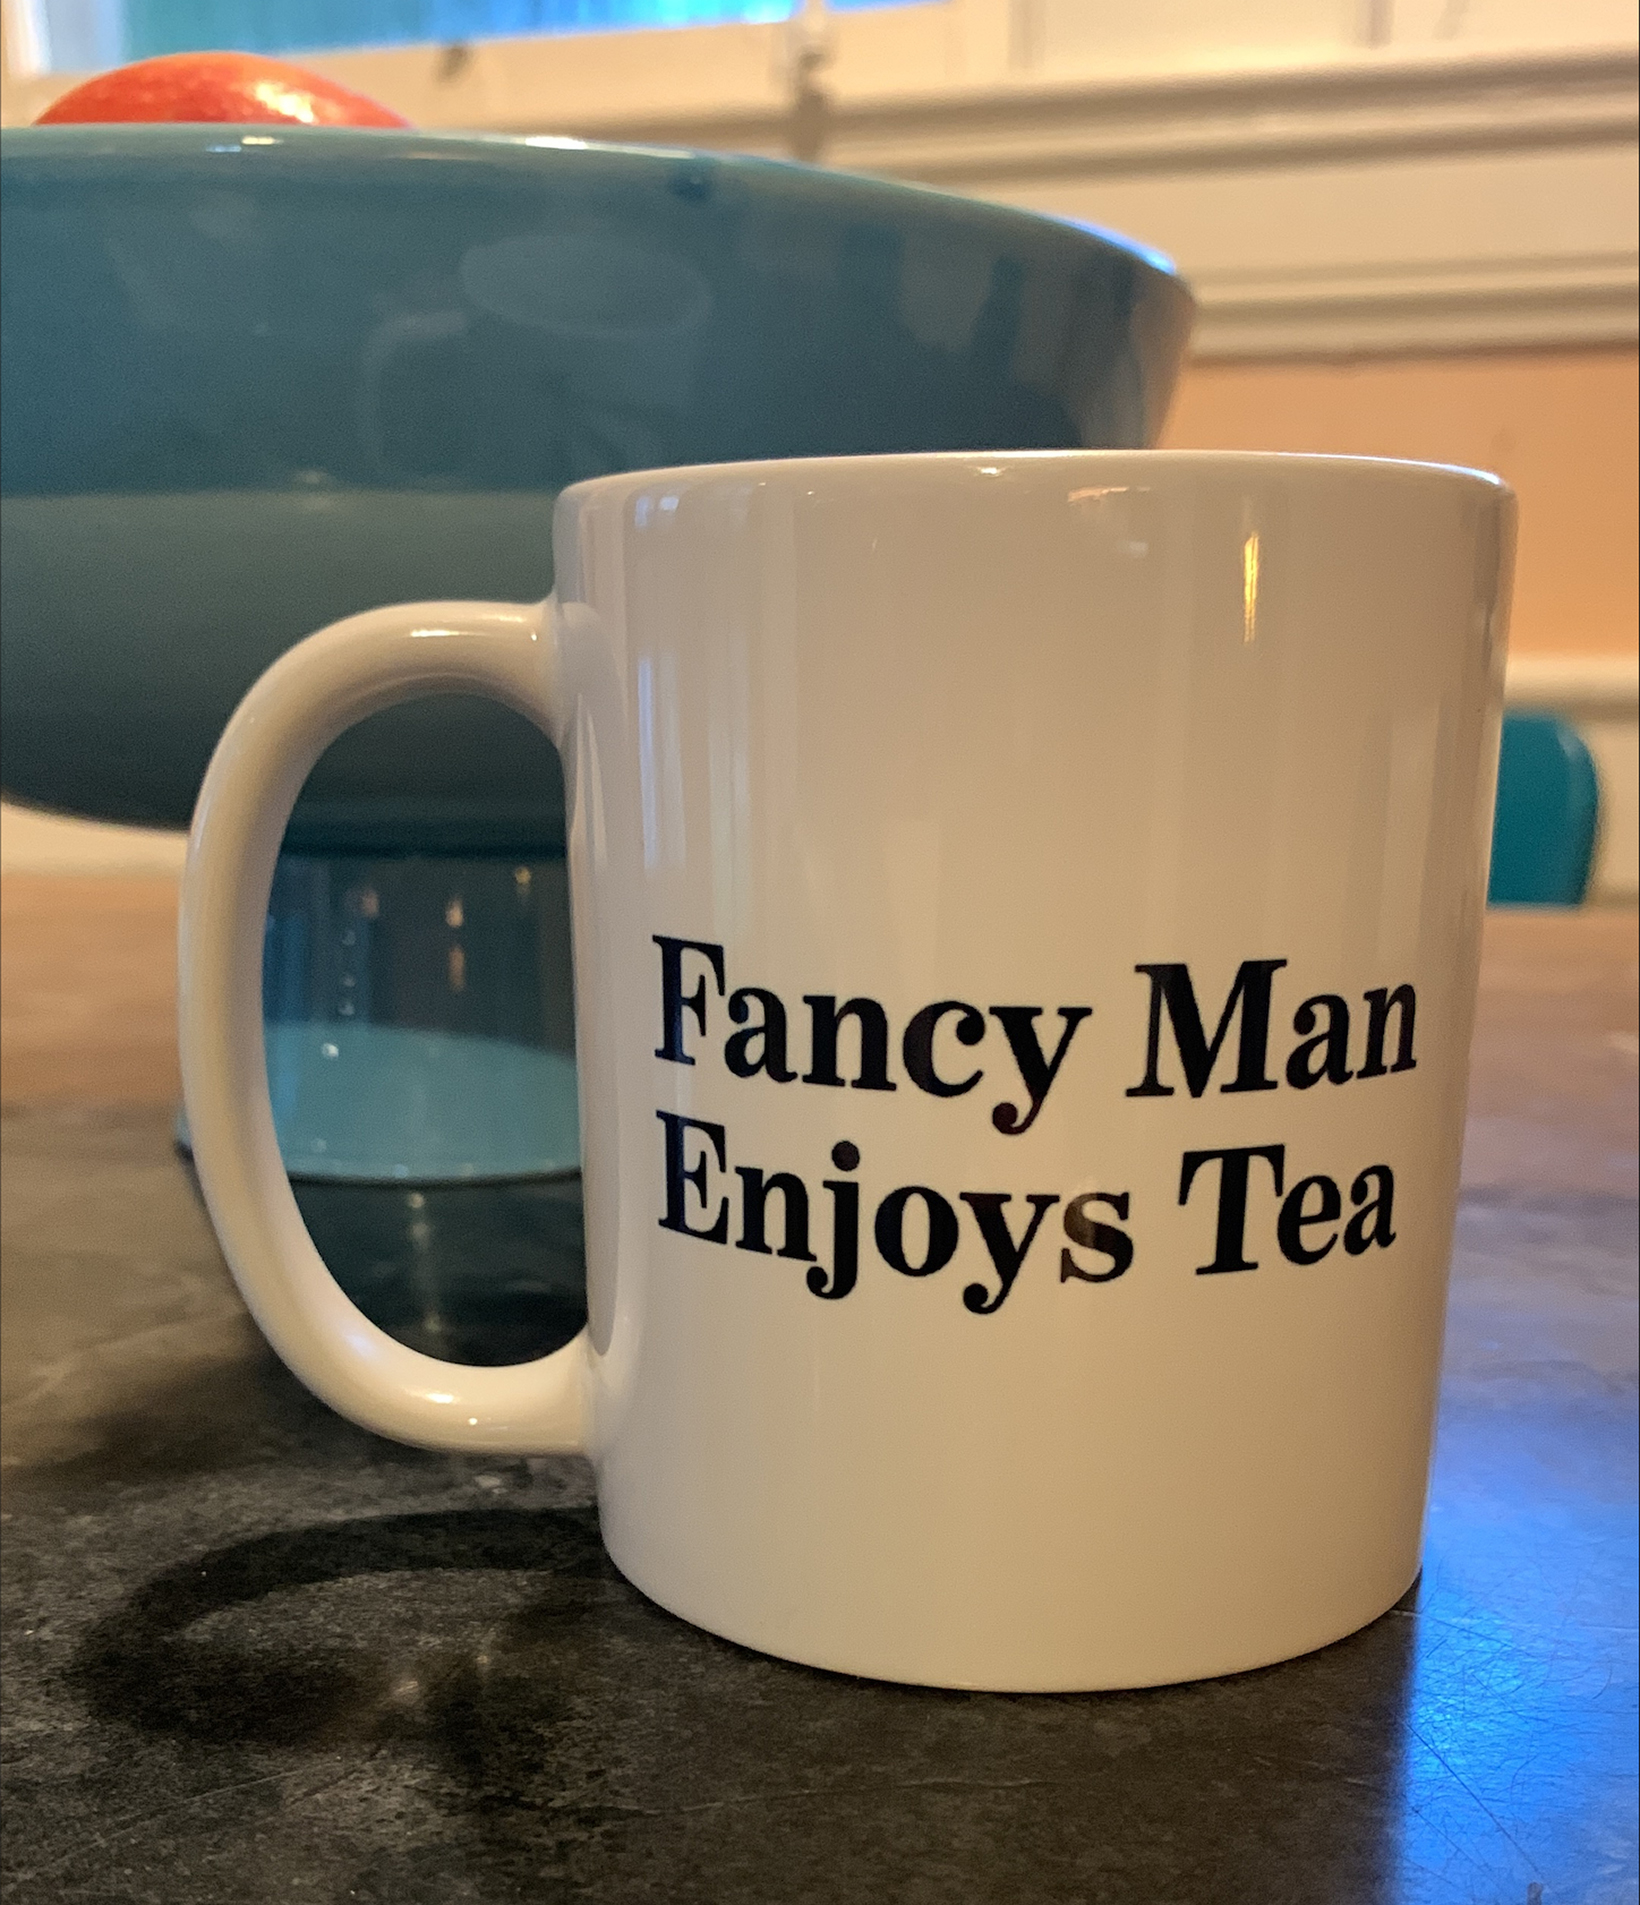 Coffee mug  that reads Fancy Man Enjoys Tea is set on a kitchen counter.